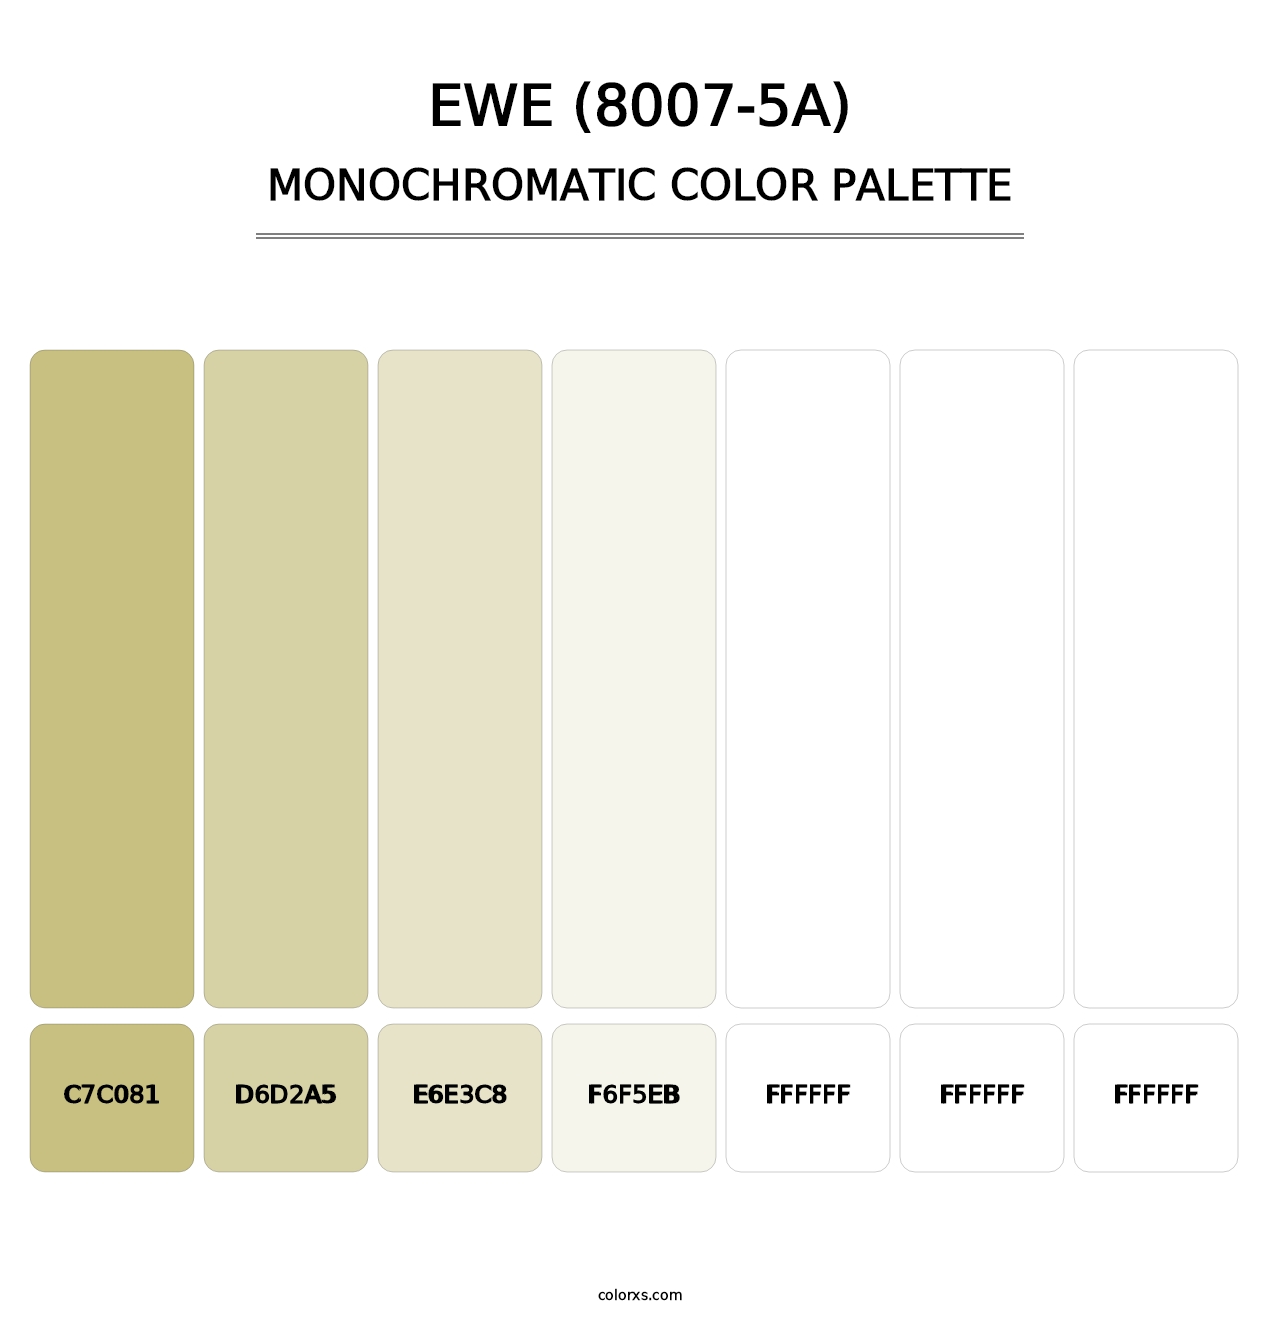 Ewe (8007-5A) - Monochromatic Color Palette